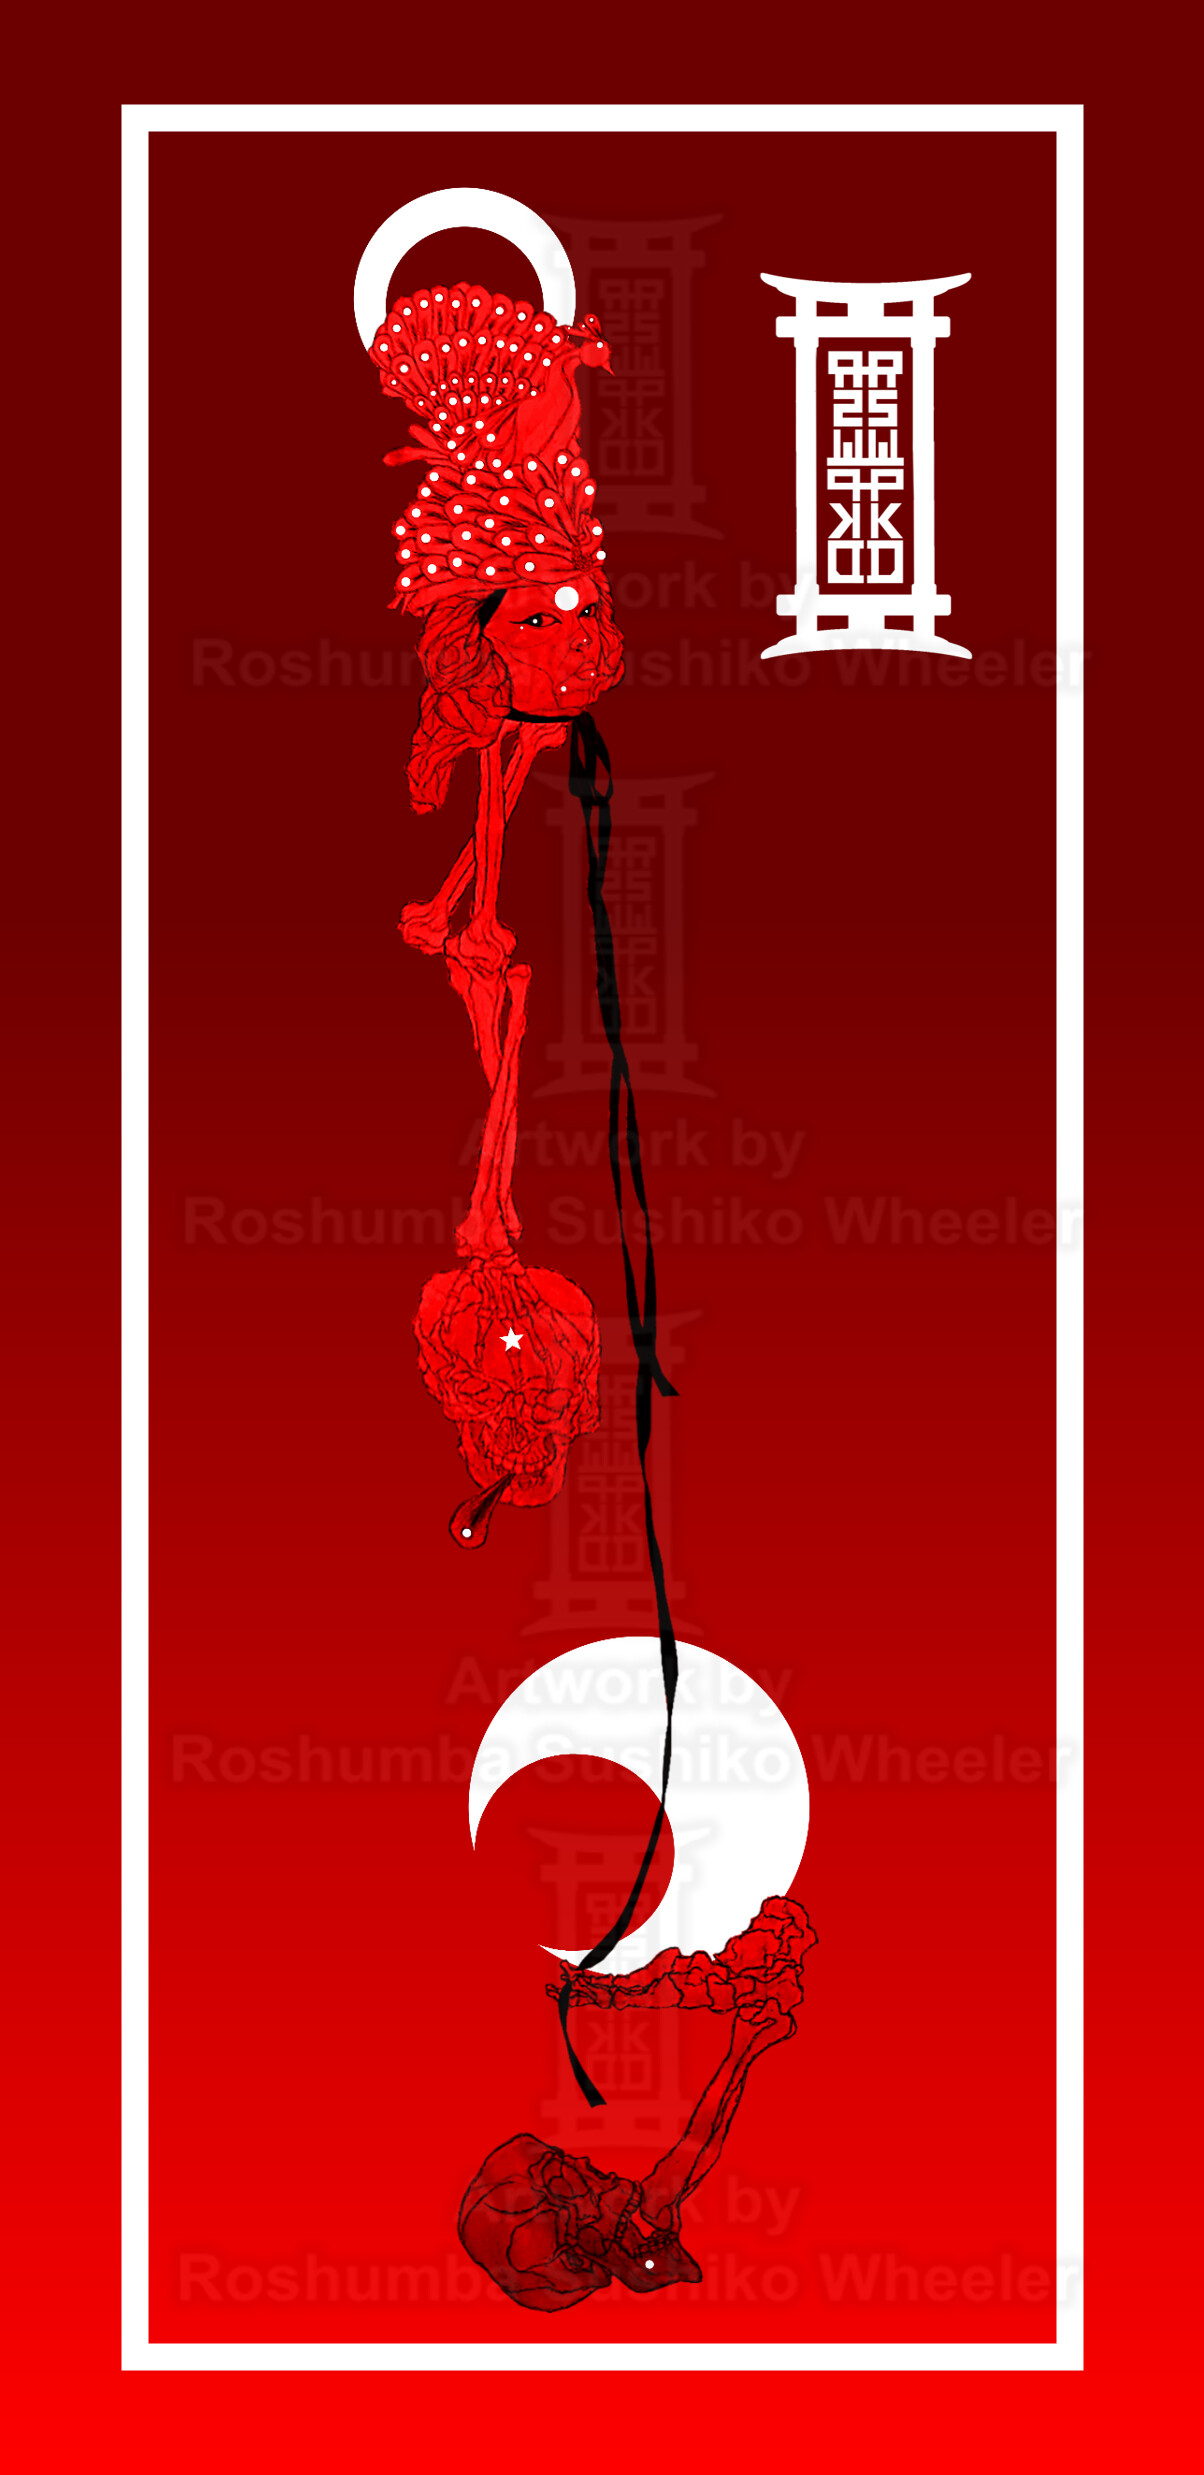 Red Rosemary Doll - Shishkabones Totem Ver. 4